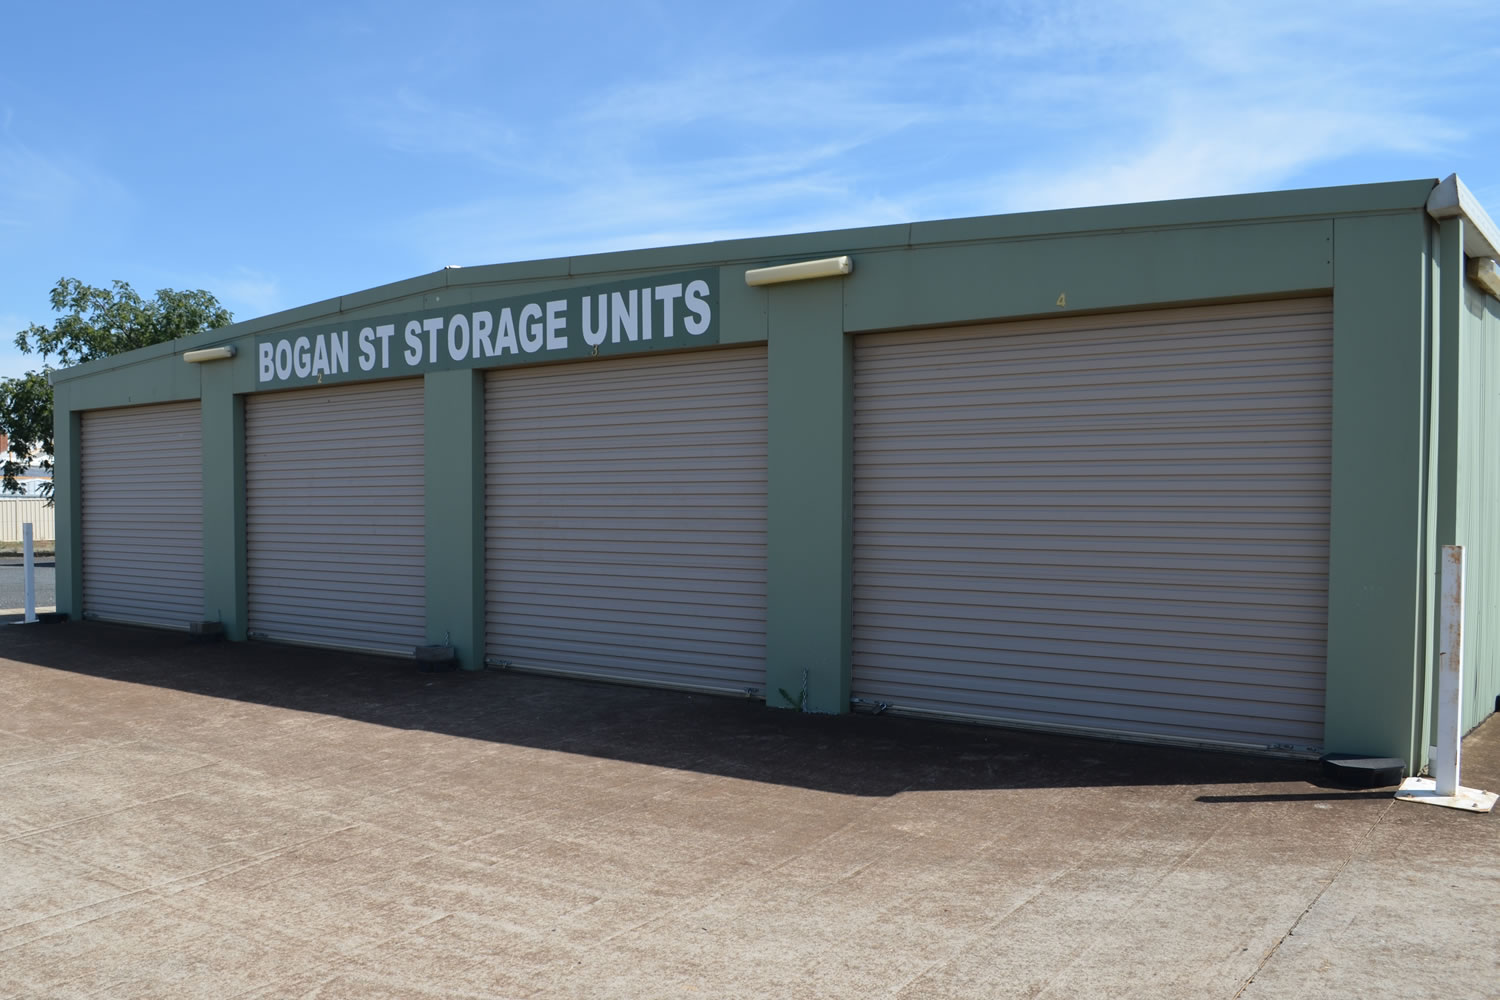 Bogan St Storage Units